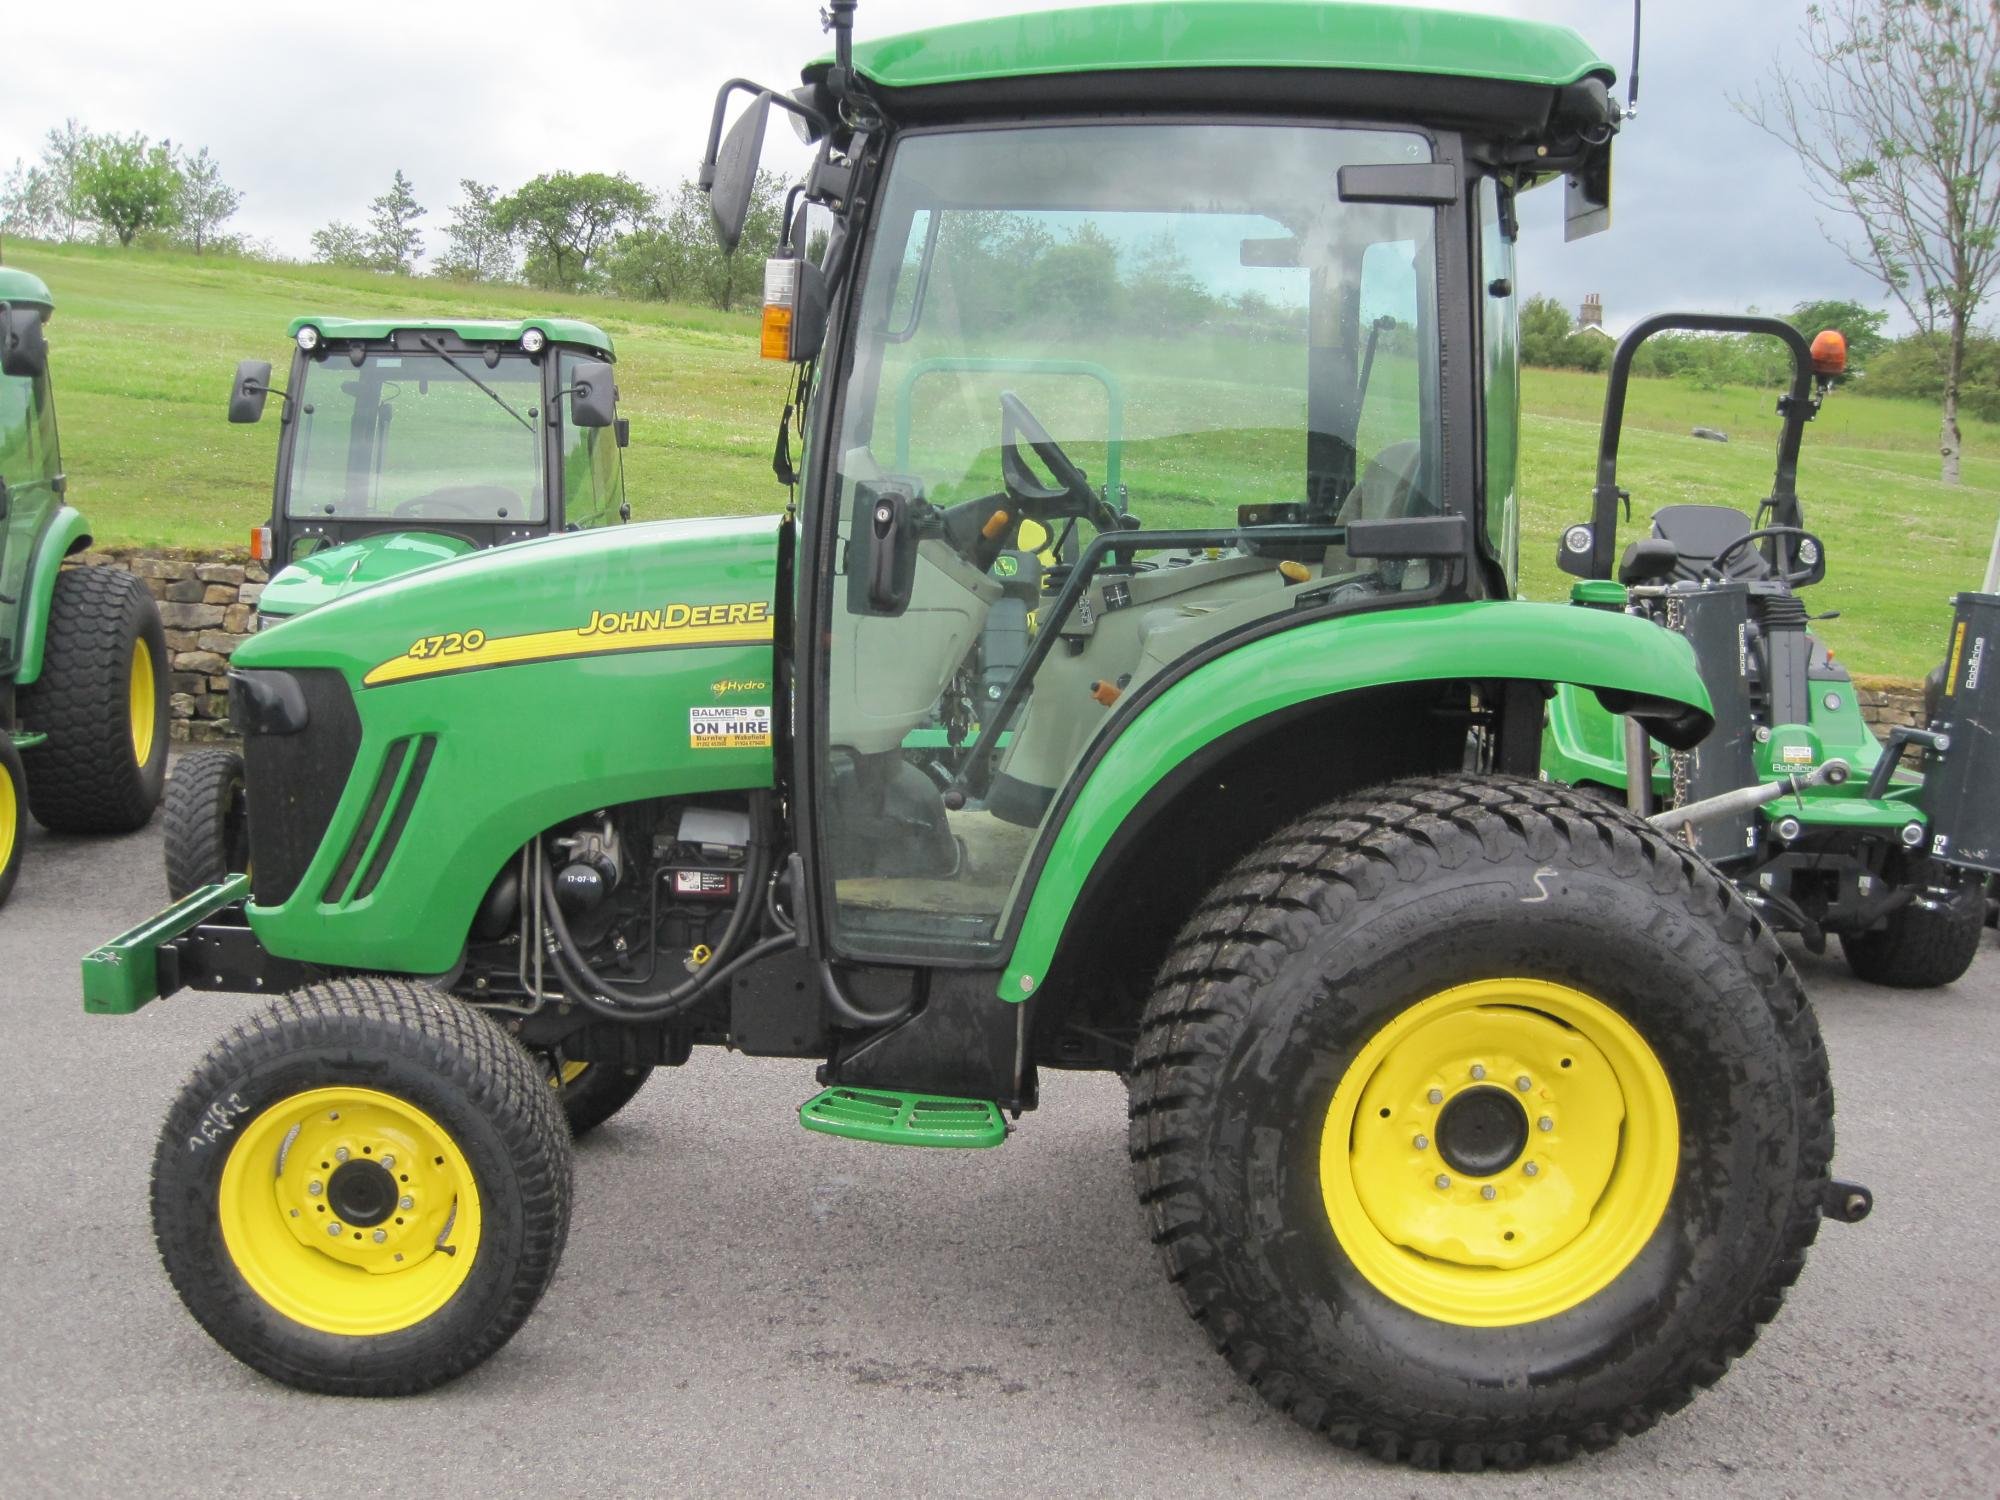 John Deere 4720 Compact Tractor | Balmers GM Ltd